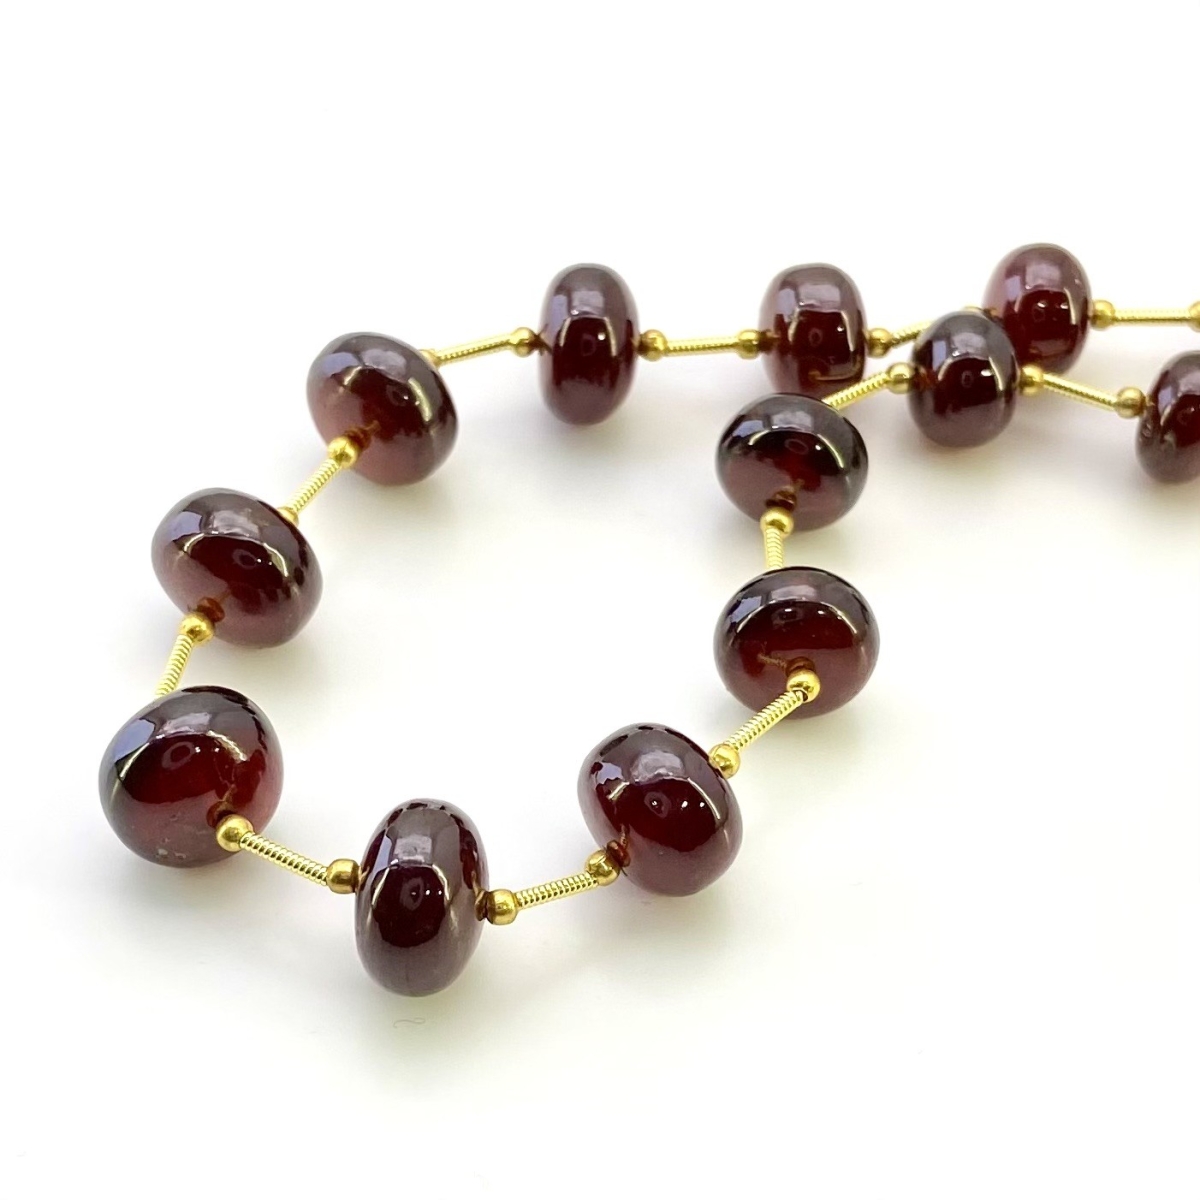 Garnet Slice Beads 6 inch 12 pieces